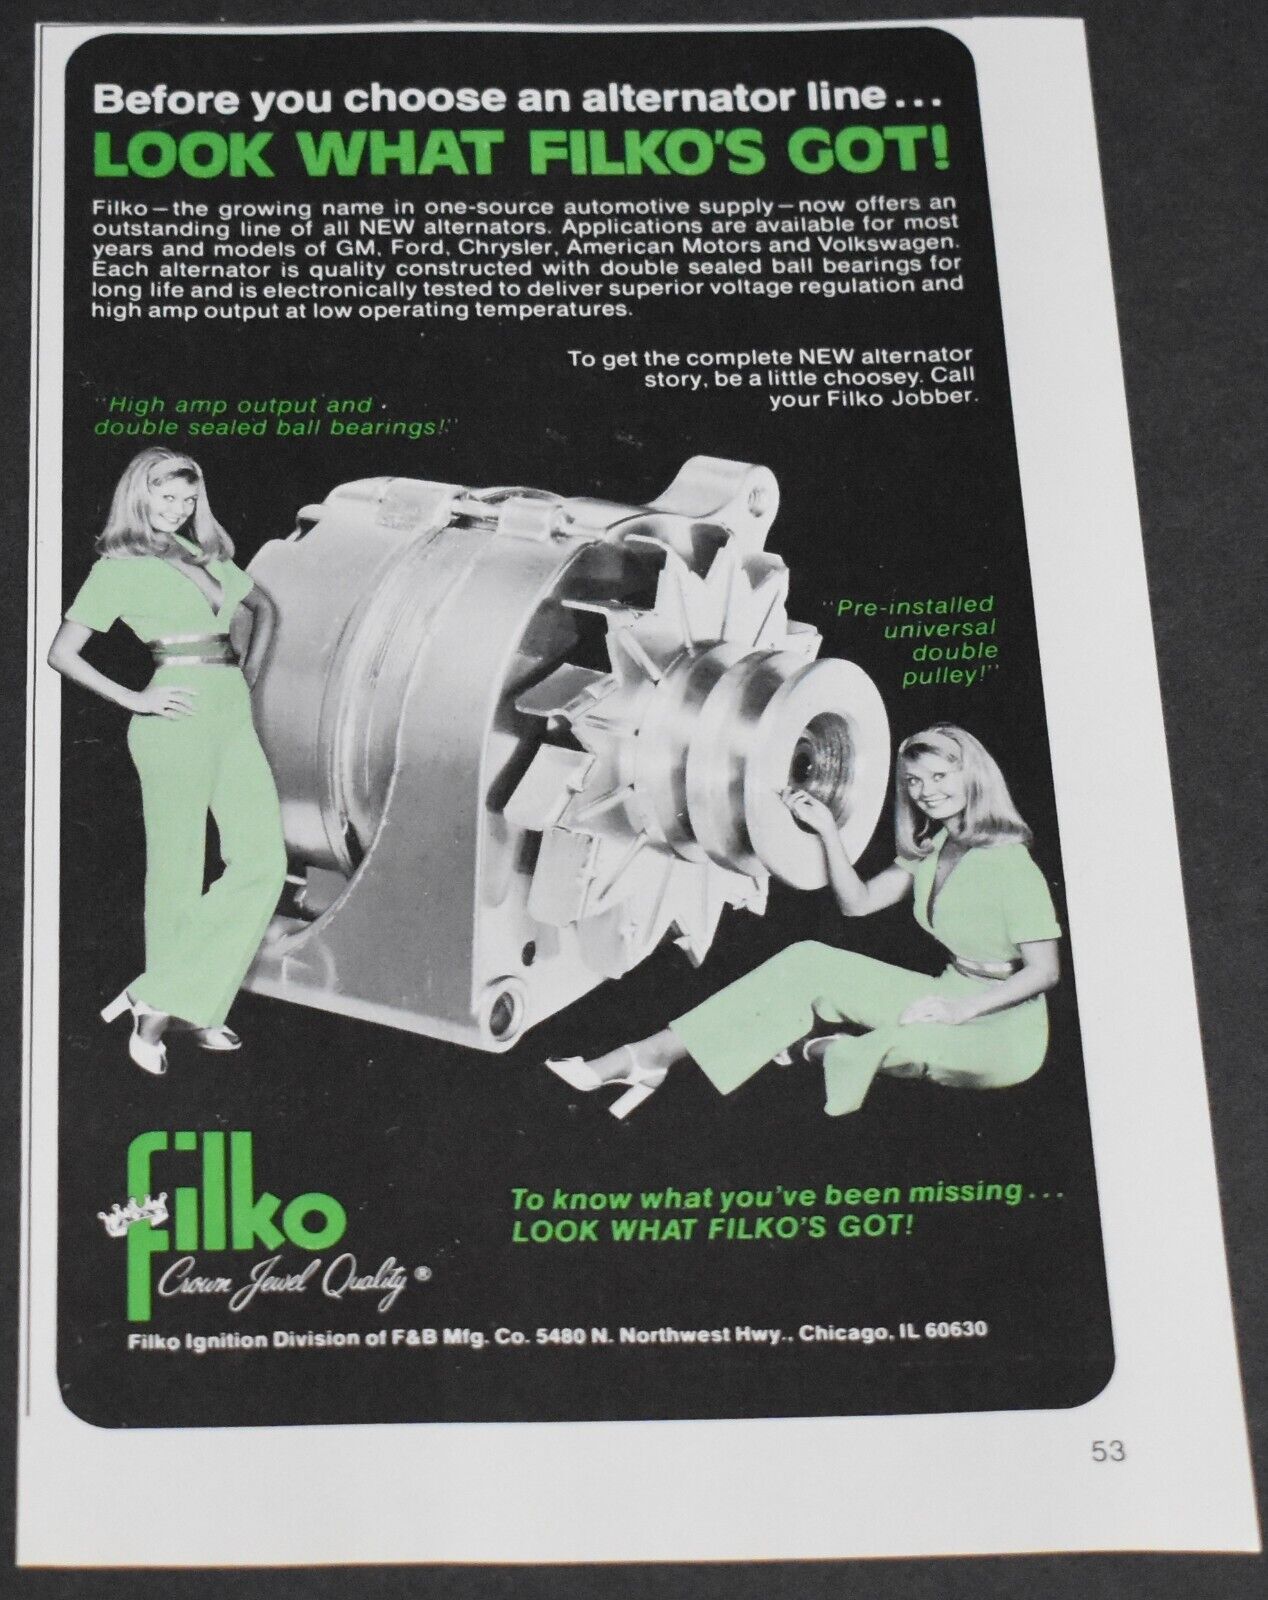 1975 Print Ad Art Pinup Girl Filko Jobber Alternator High Amp Chicago IL Sexy